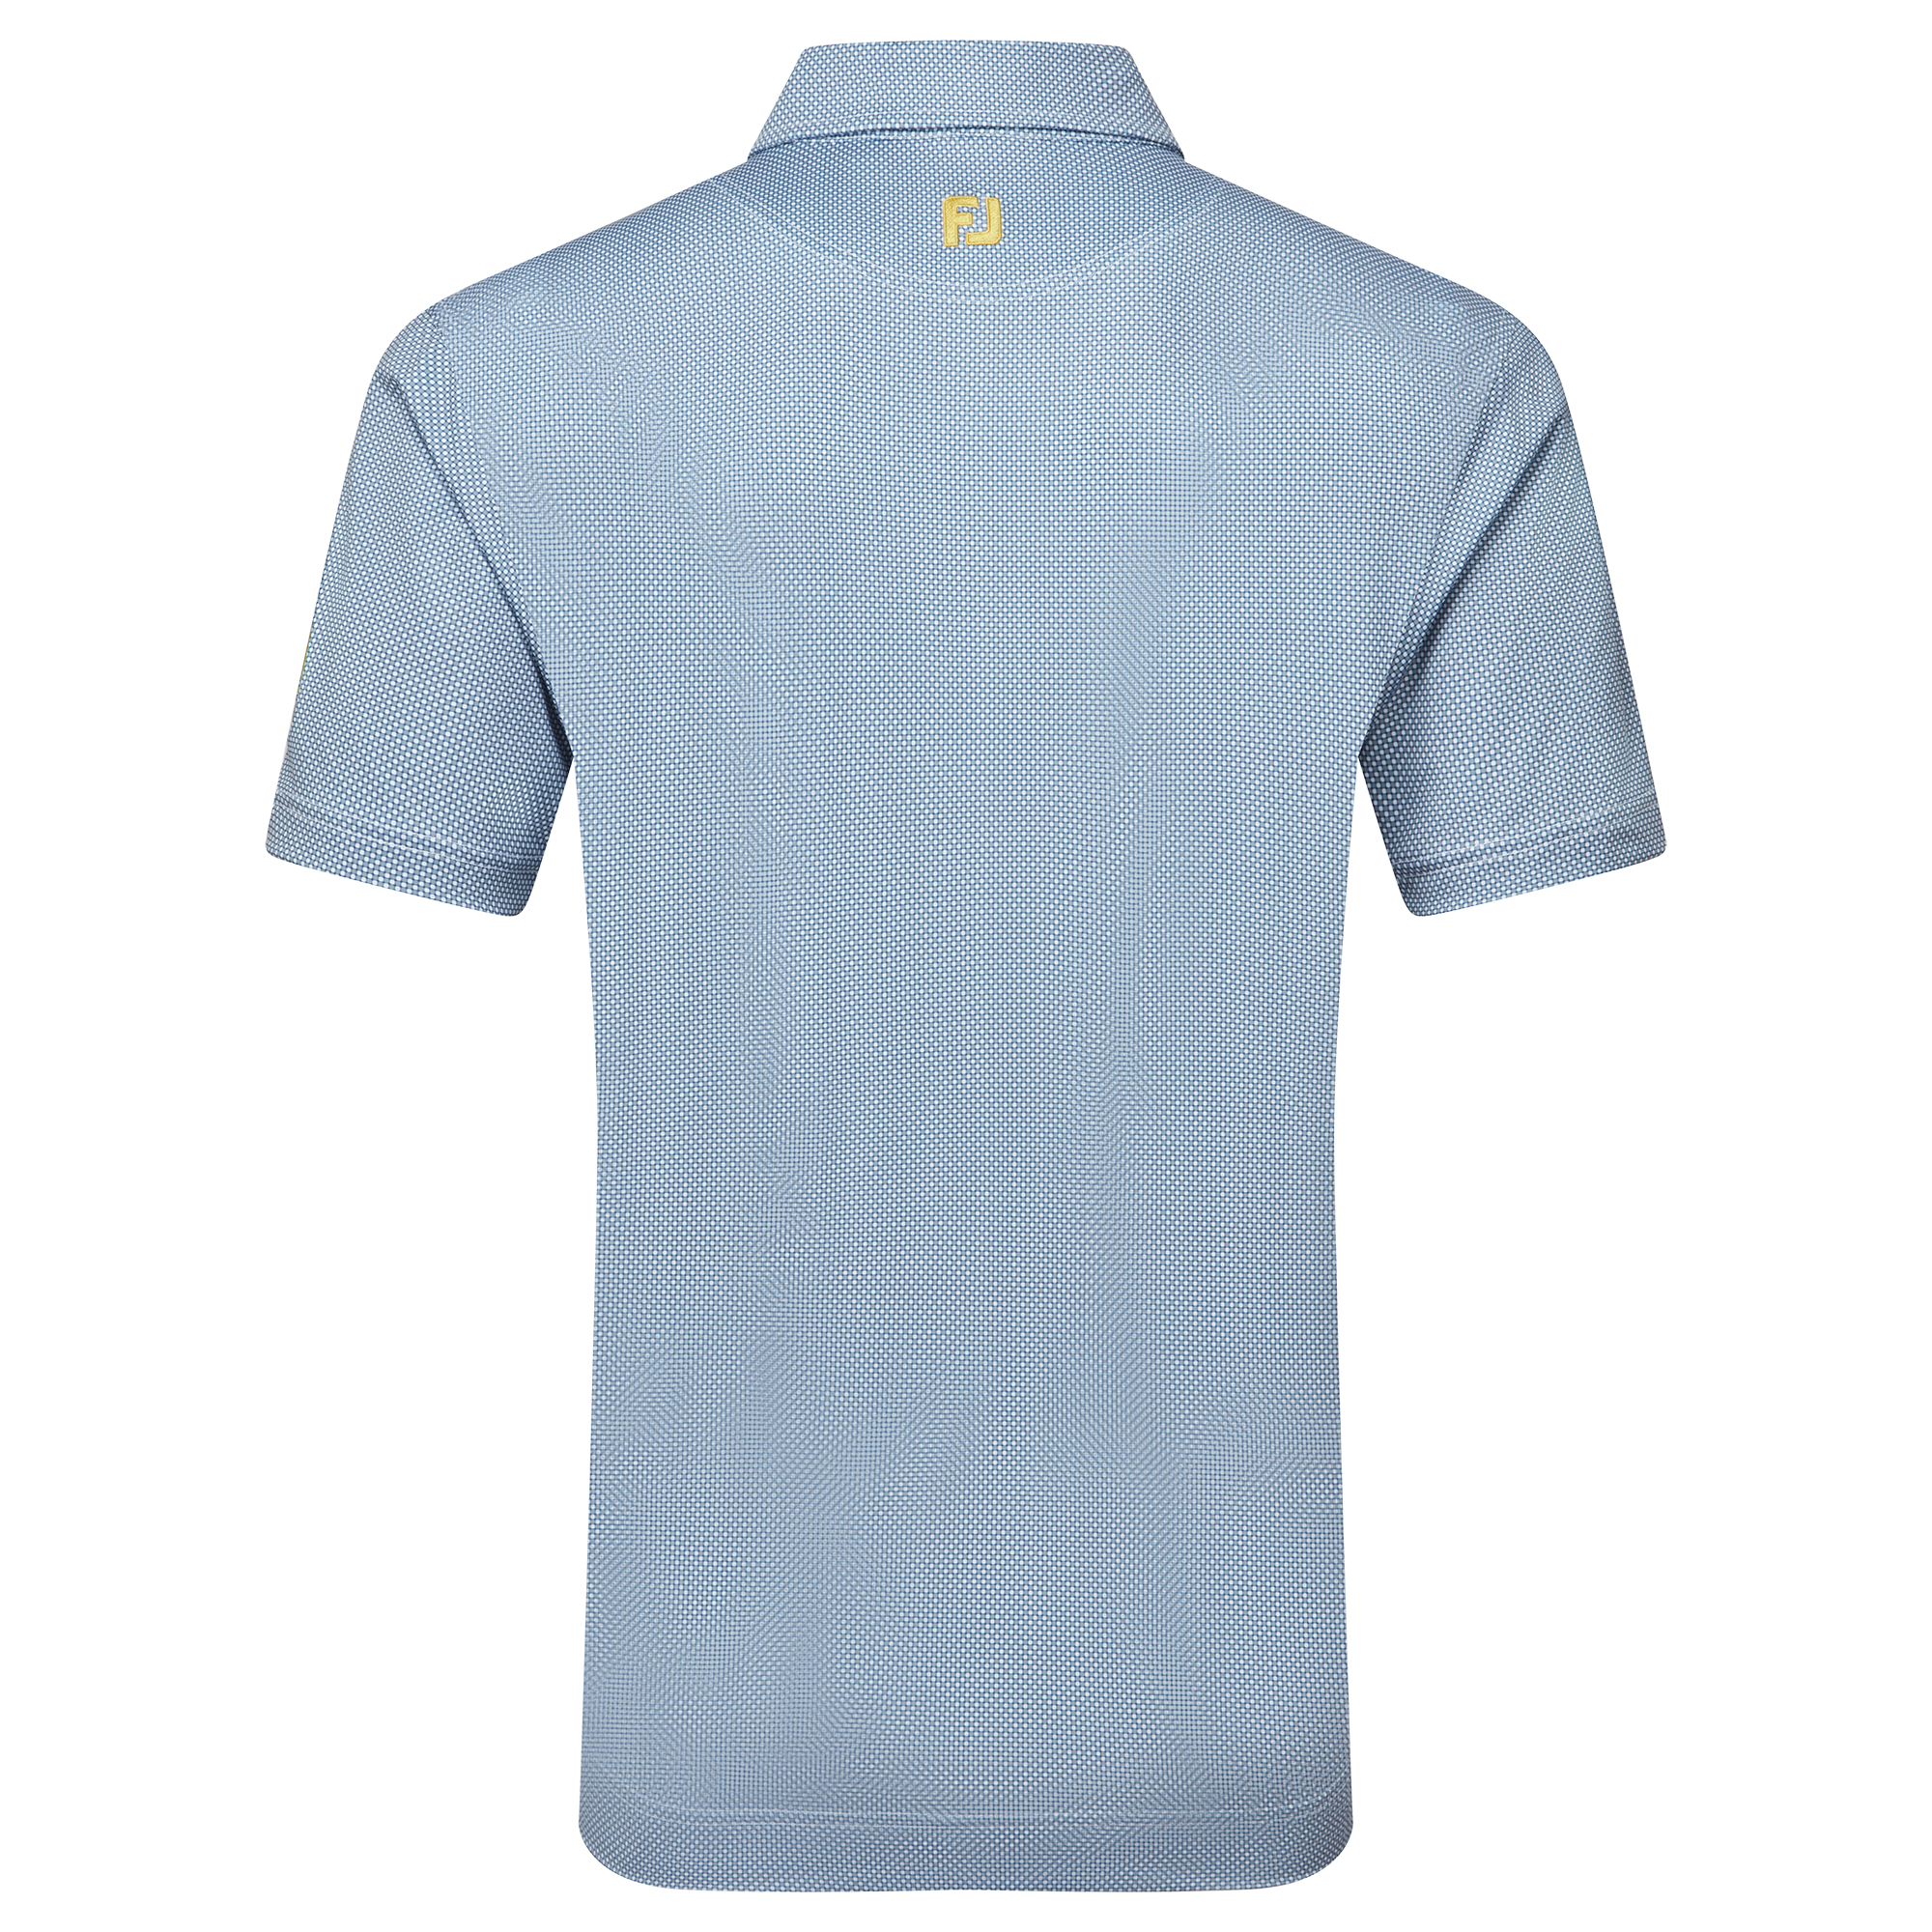 152:a Open Championship Octagon Print Lisle Shirt